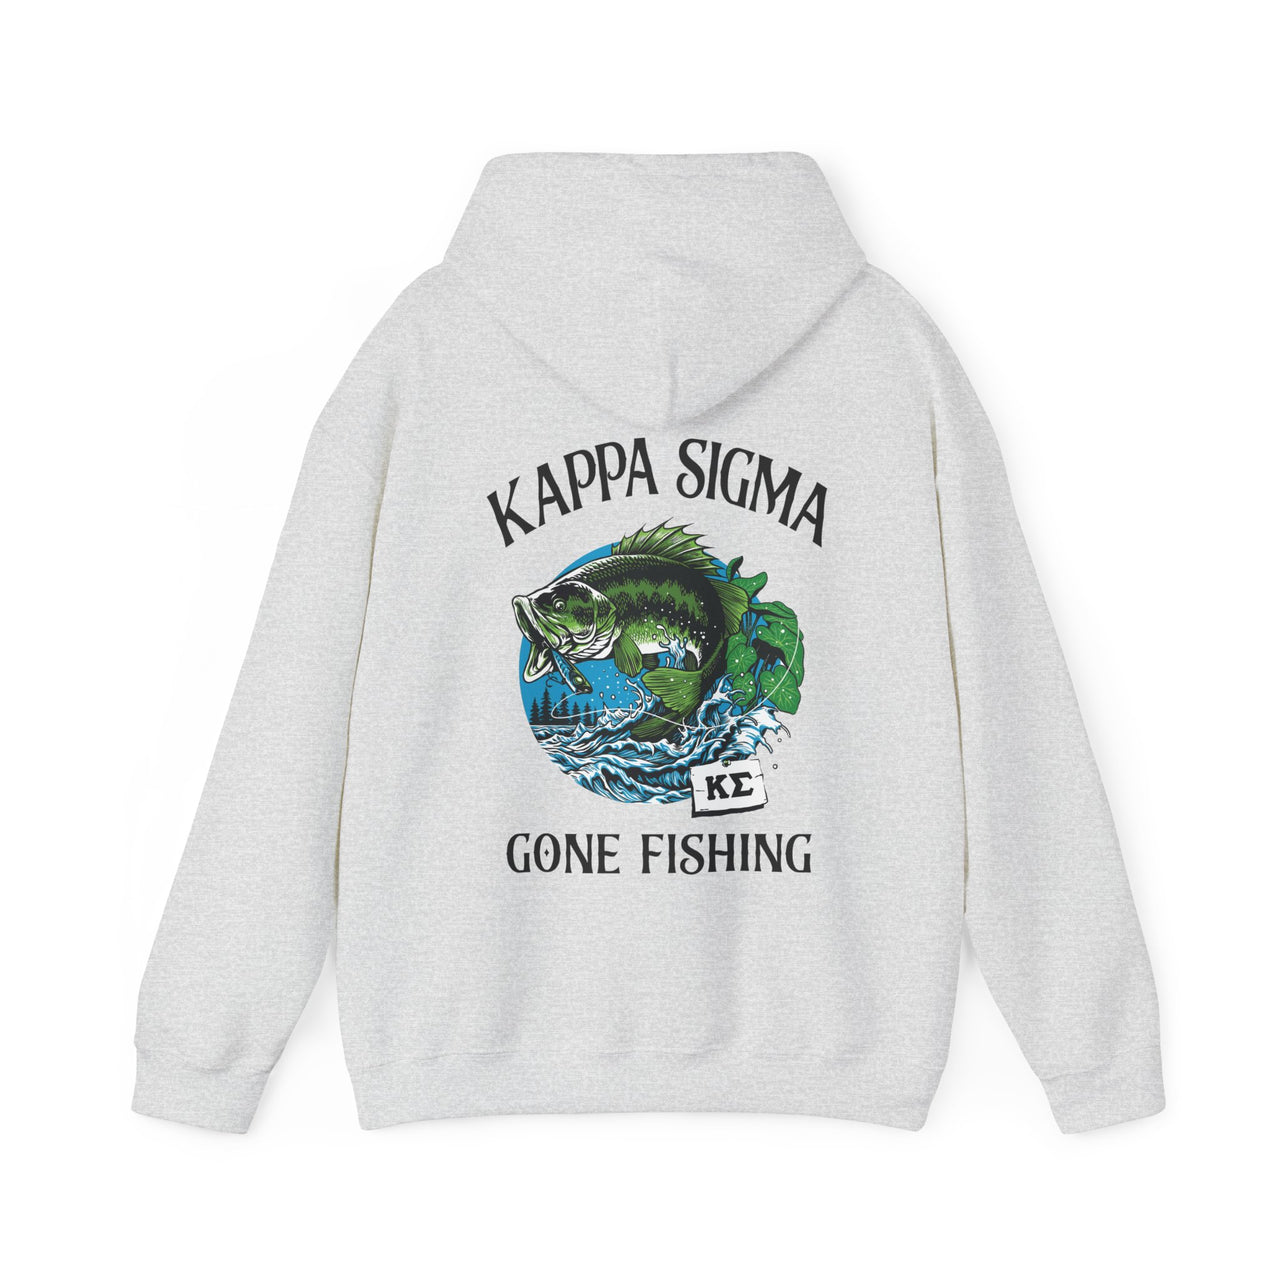 Kappa Sigma Graphic Hoodie | Gone Fishing